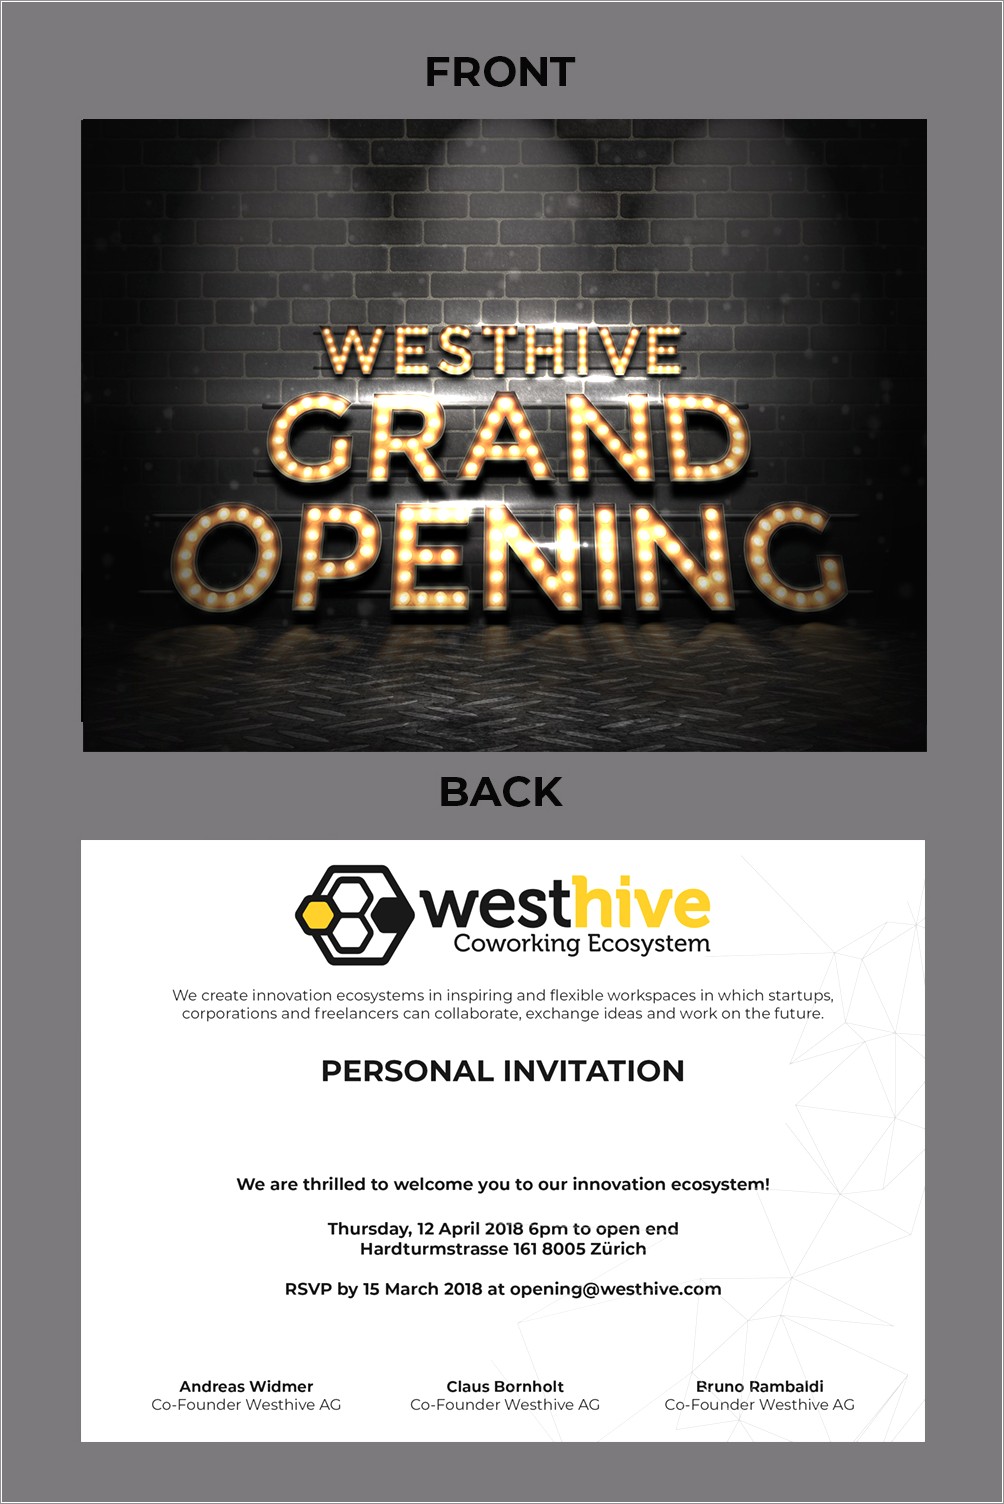 Grand Opening Invitation Card Design